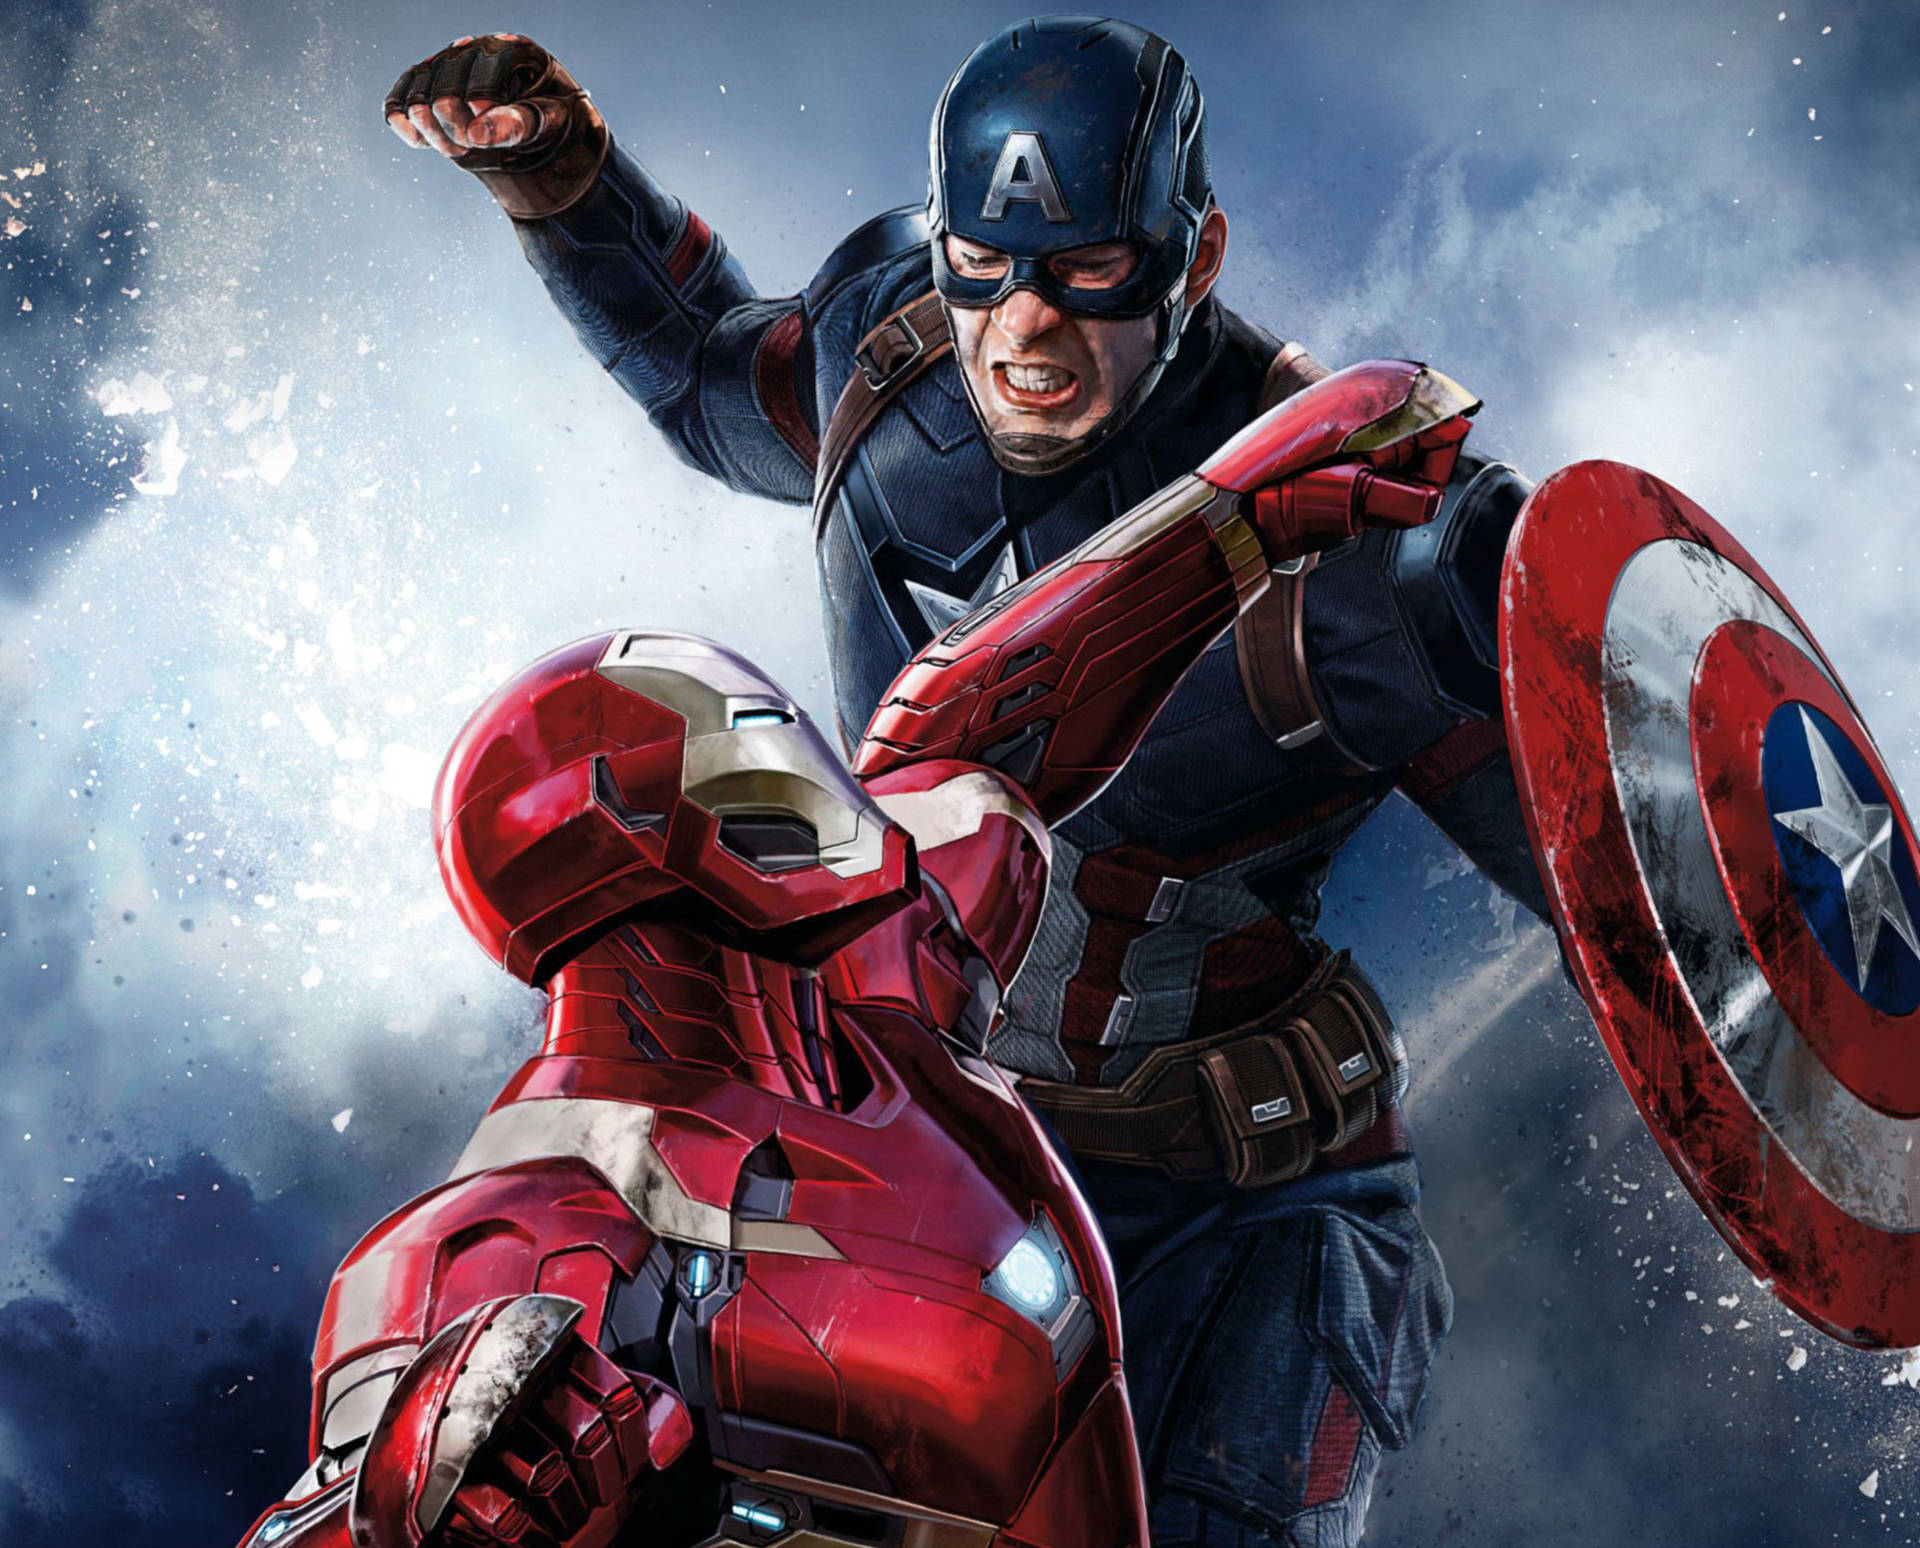 Download Iron Man Punching Captain America Civil War Wallpaper | Wallpapers .com